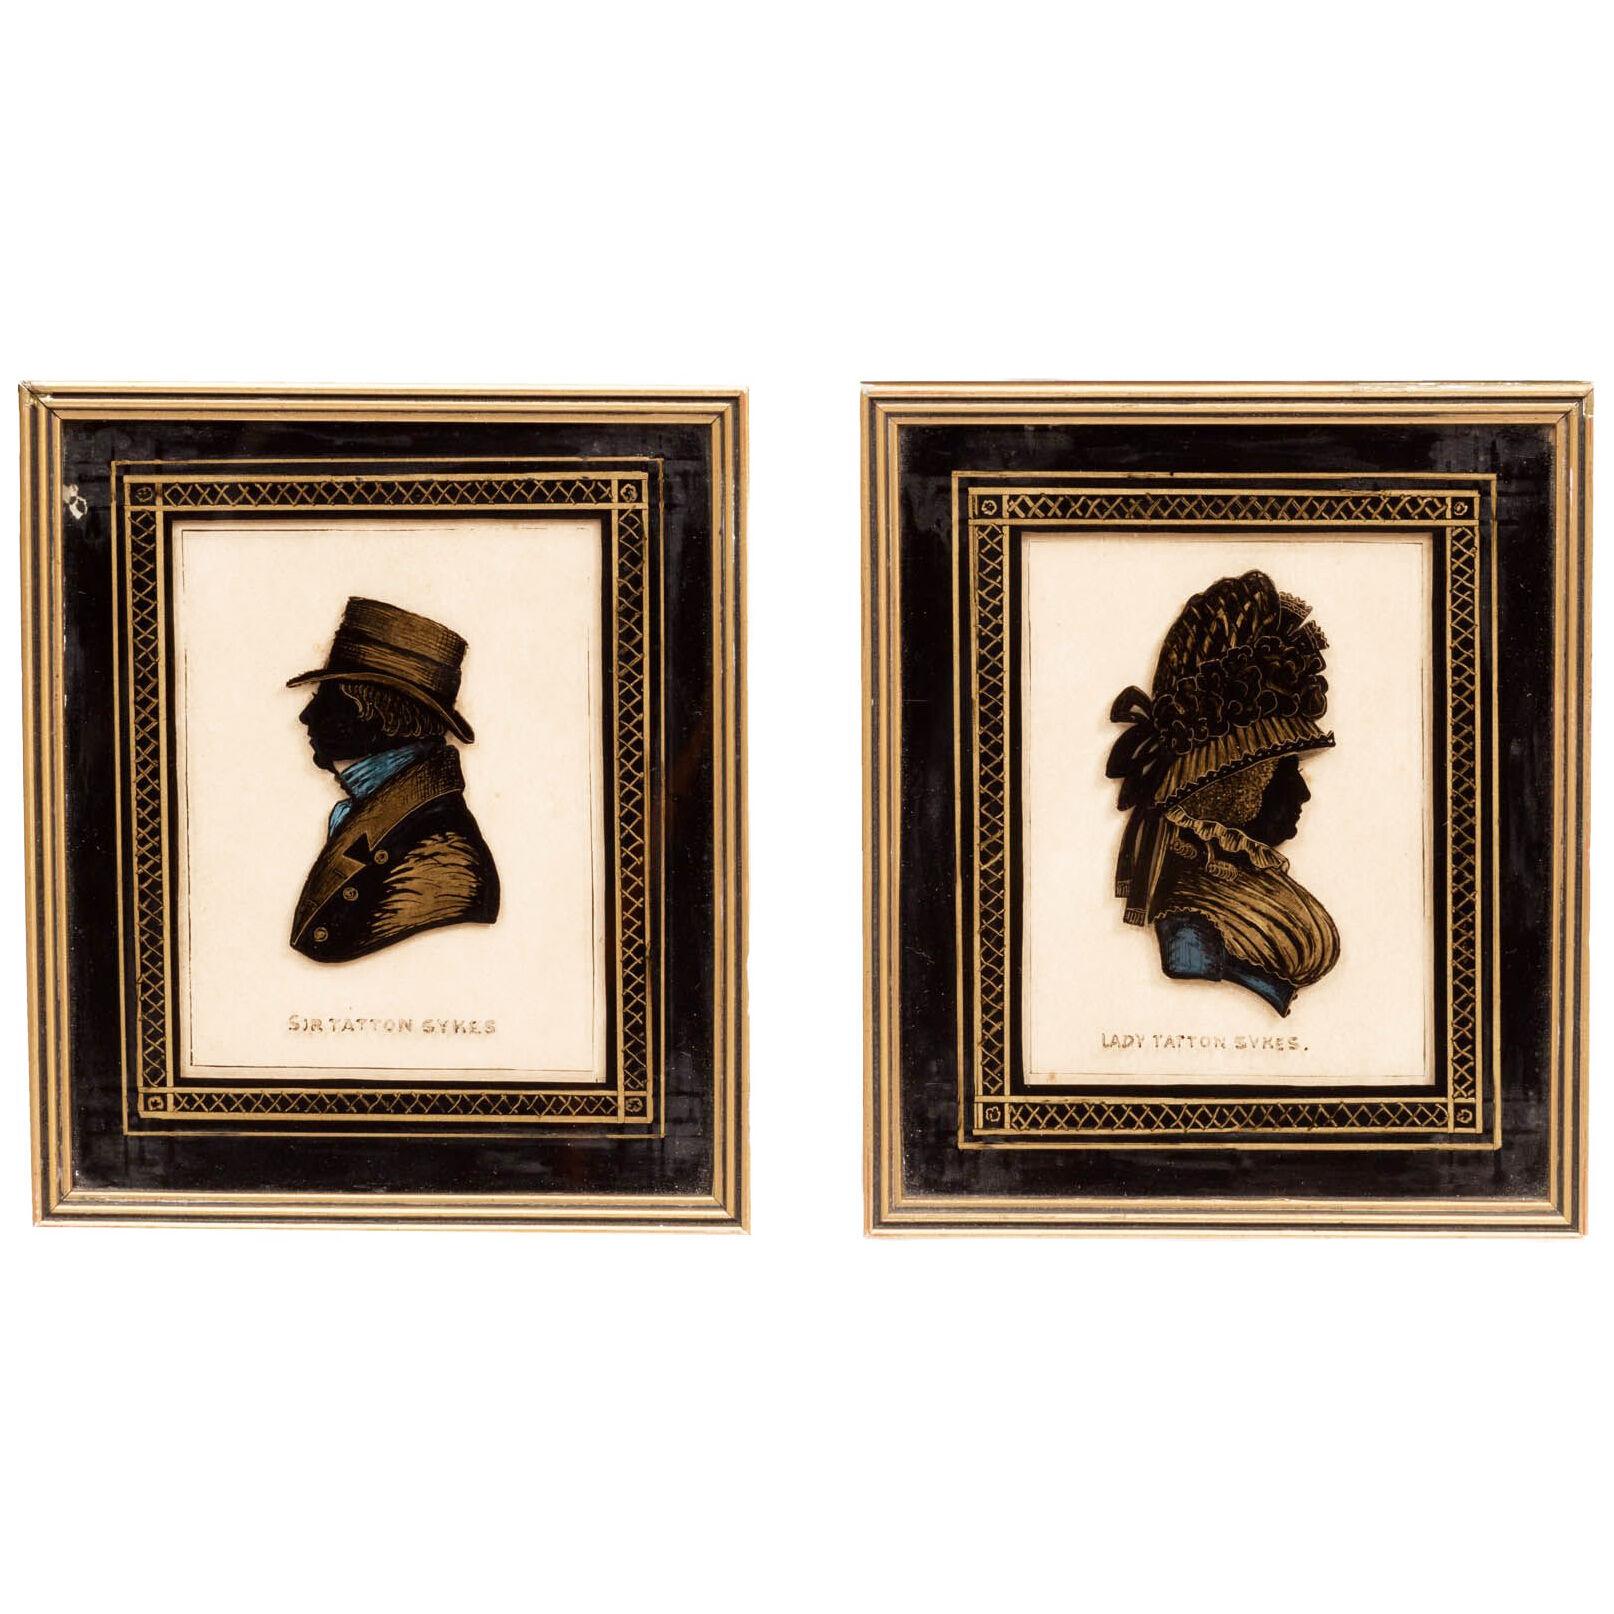 19th Century English Miniature Silhouettes Depicting Sir & Lady Tatton Sykes